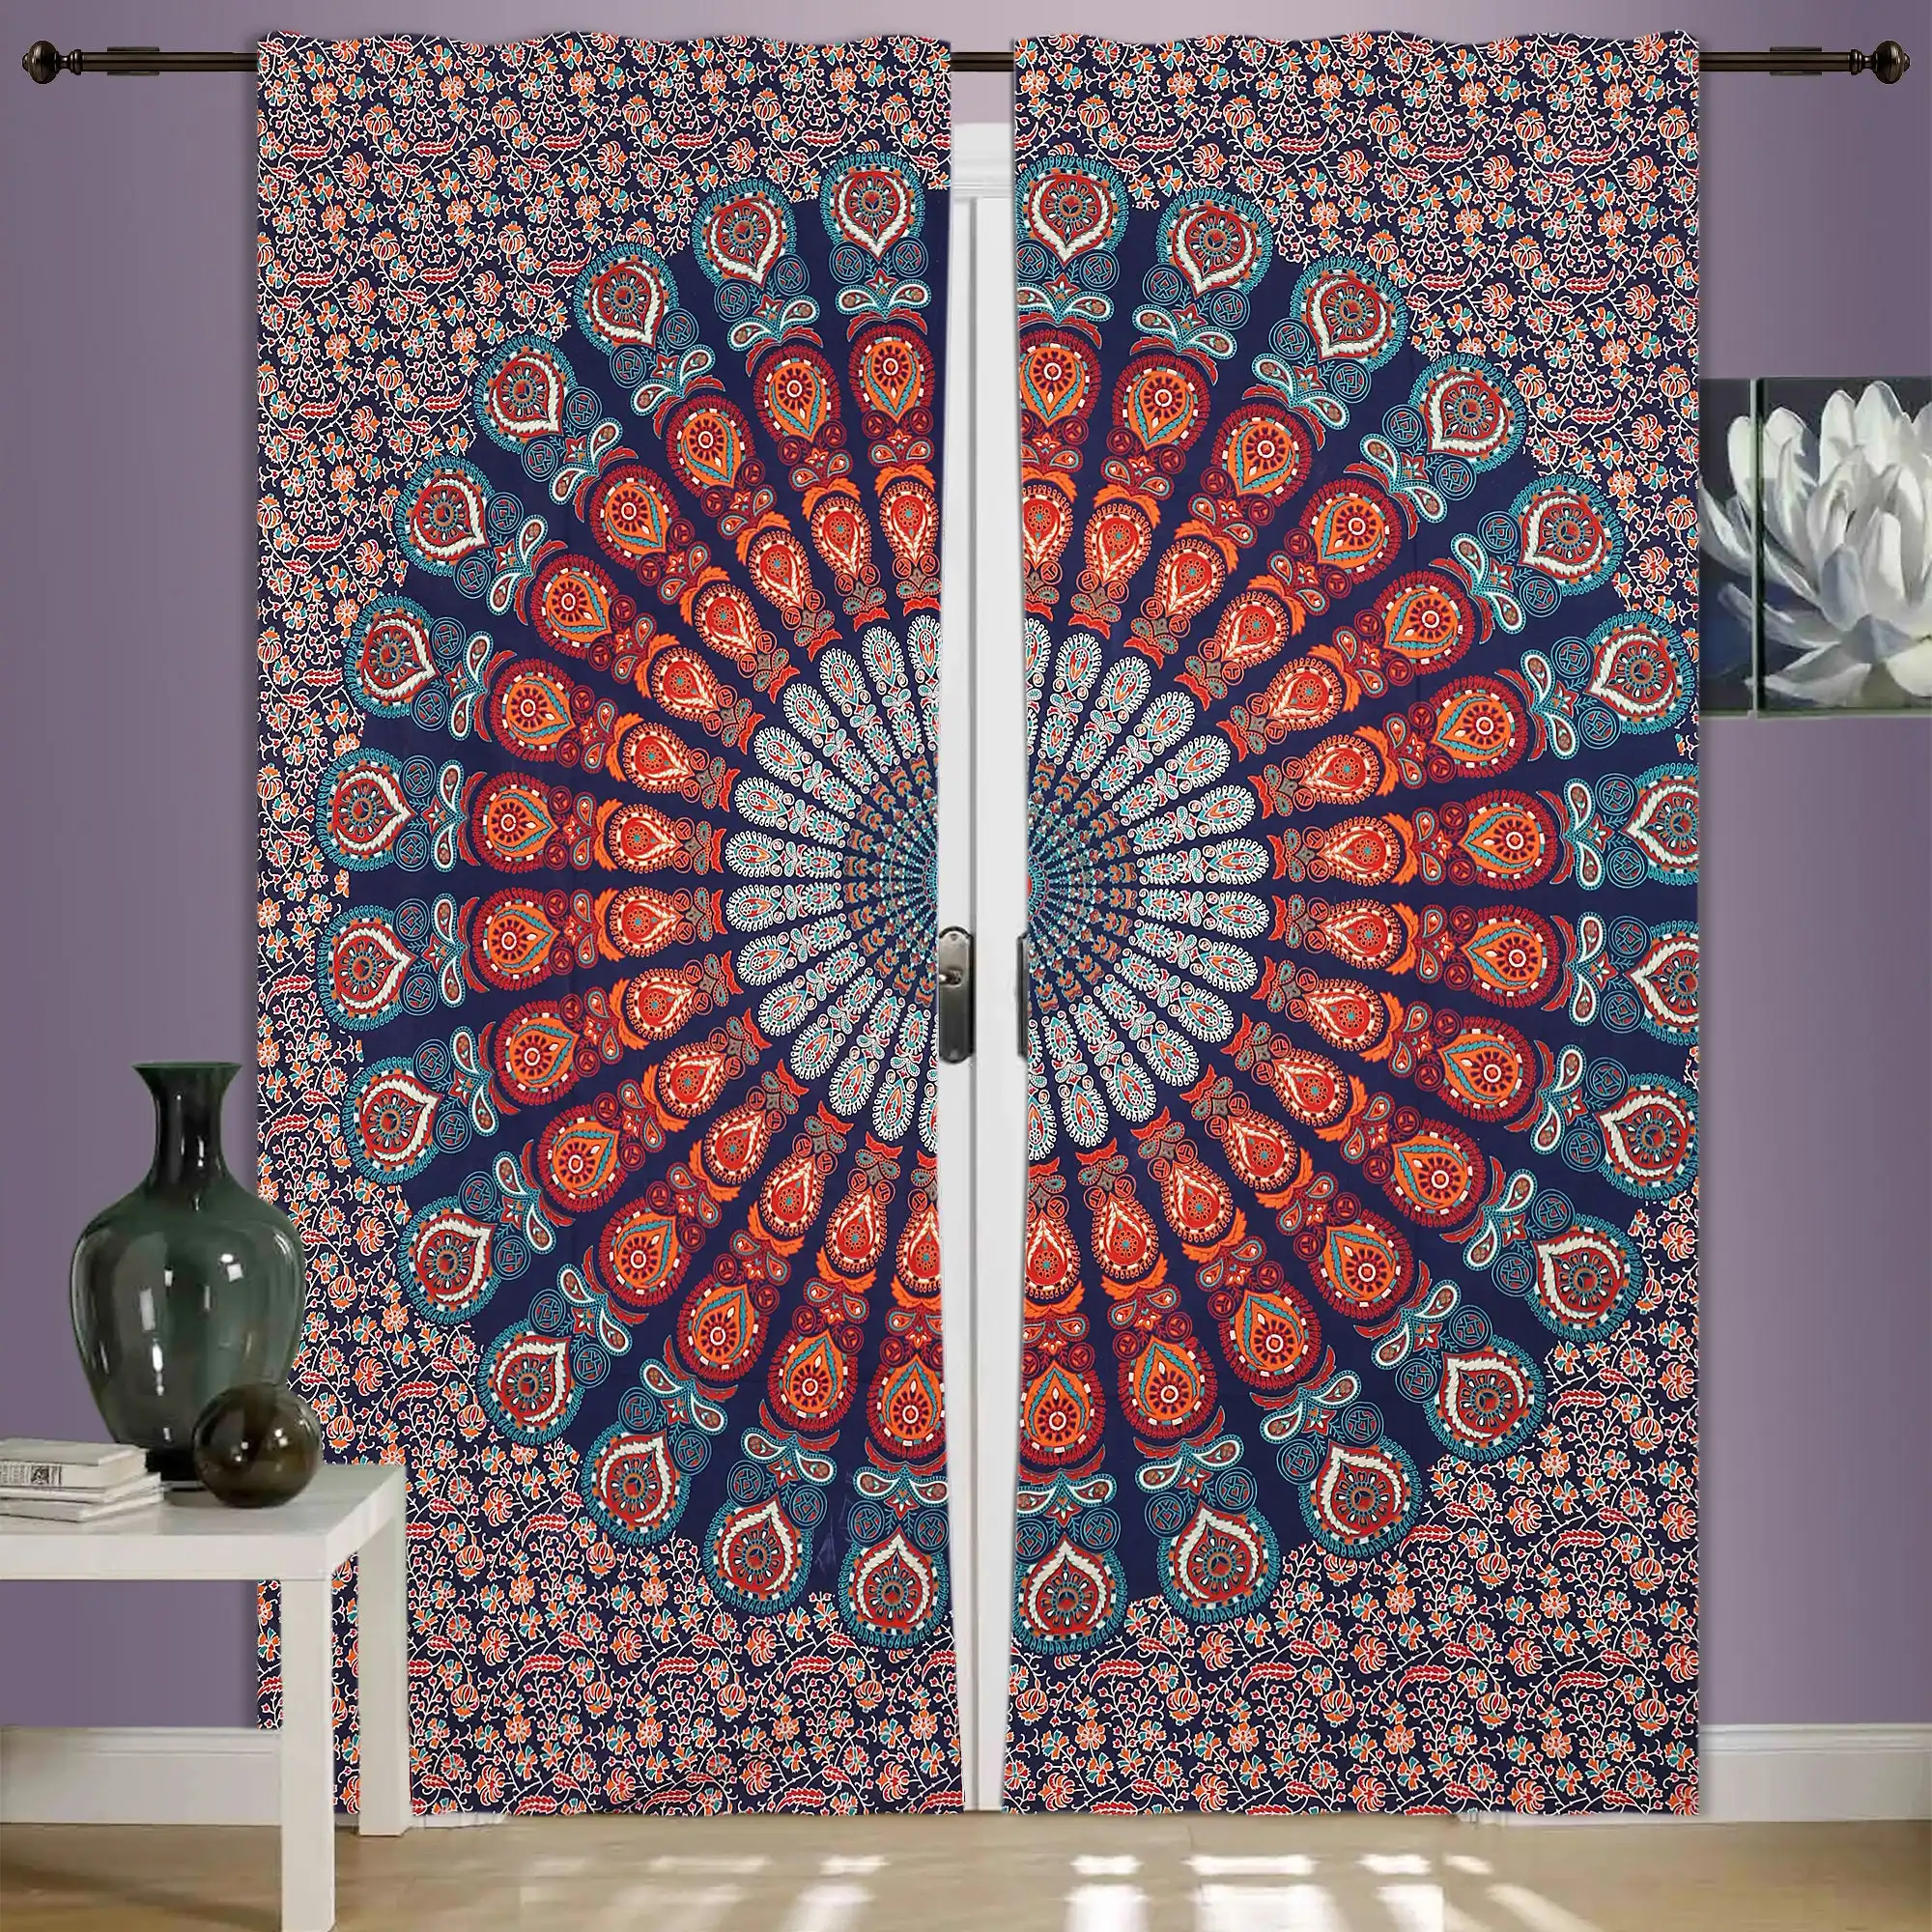 Ombre Mandala Big Curtain Wall Hanging Curtain Door Window Cover Valance Drape Multiple Color